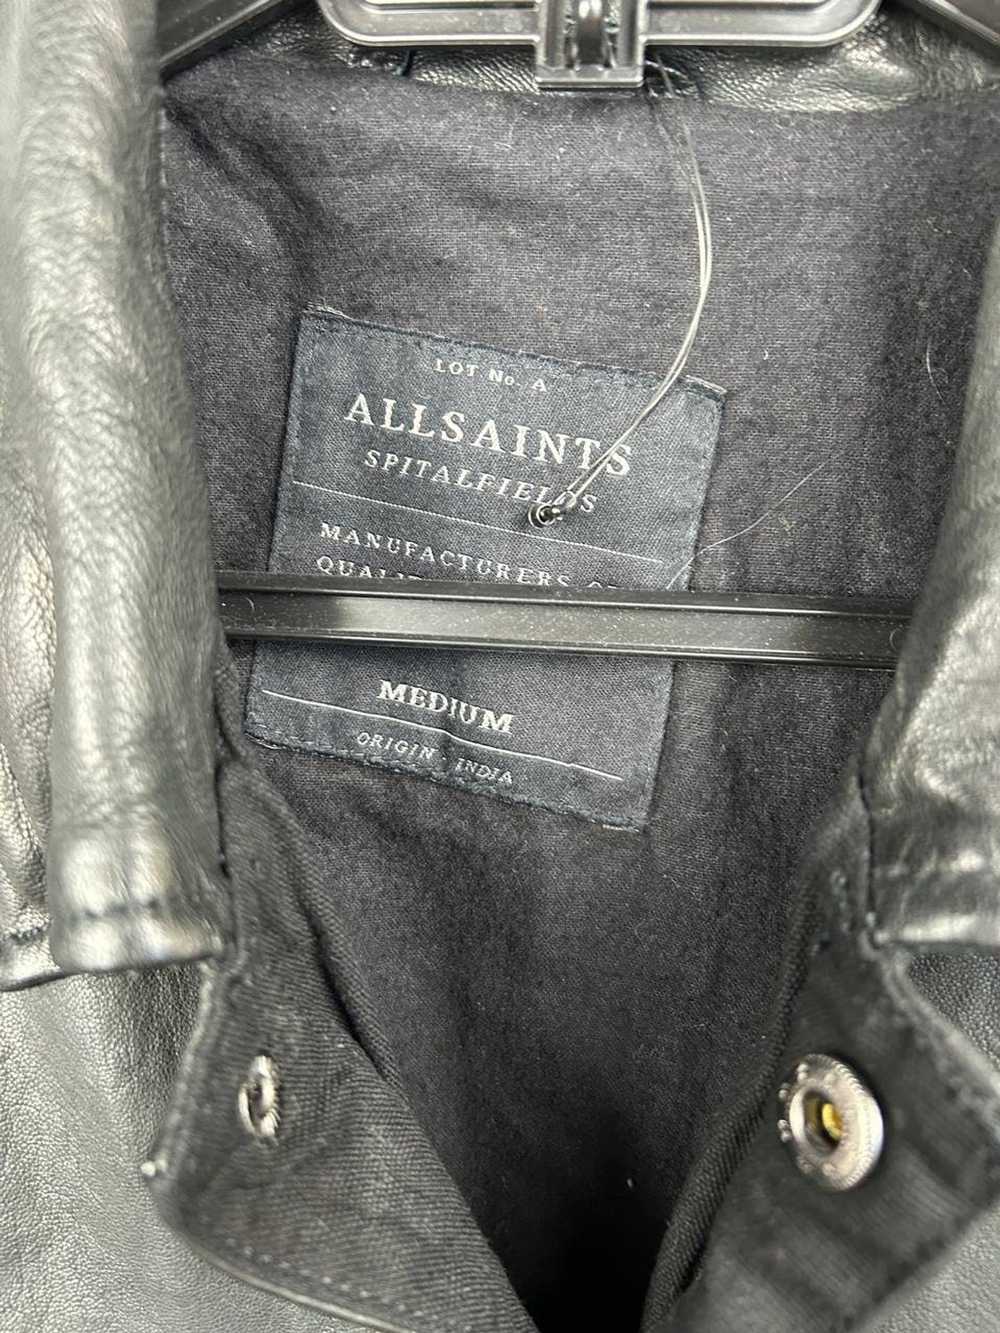 Allsaints Allsaints Spitalfields Leather Jacket - image 2